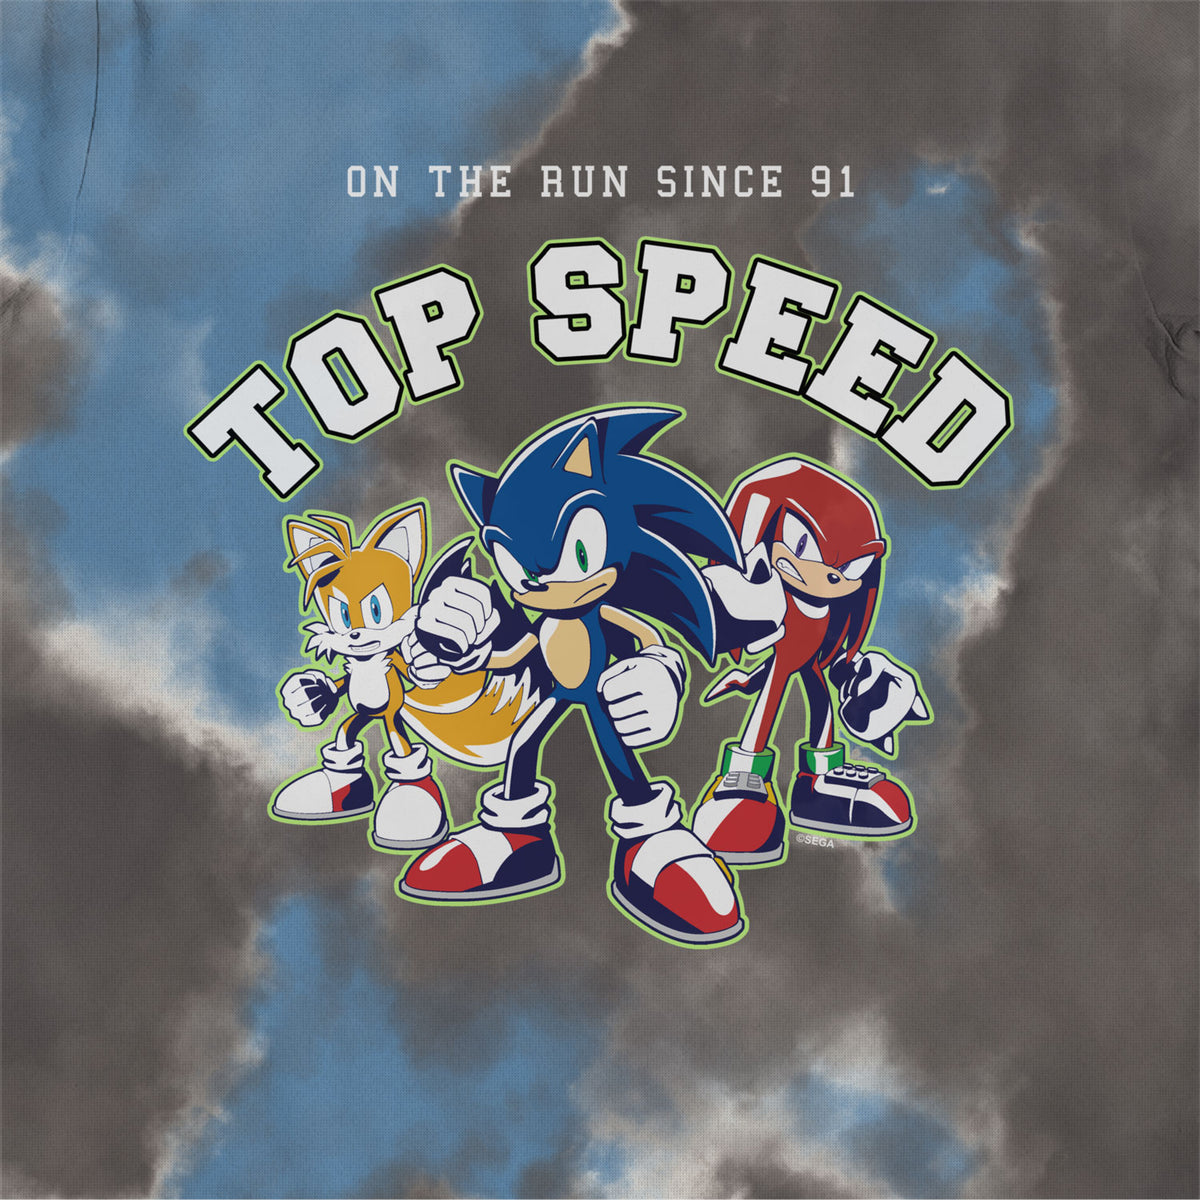 Sonic The Hedgehog Top Speed Tie Dye Grey & Blue Kids T-Shirt